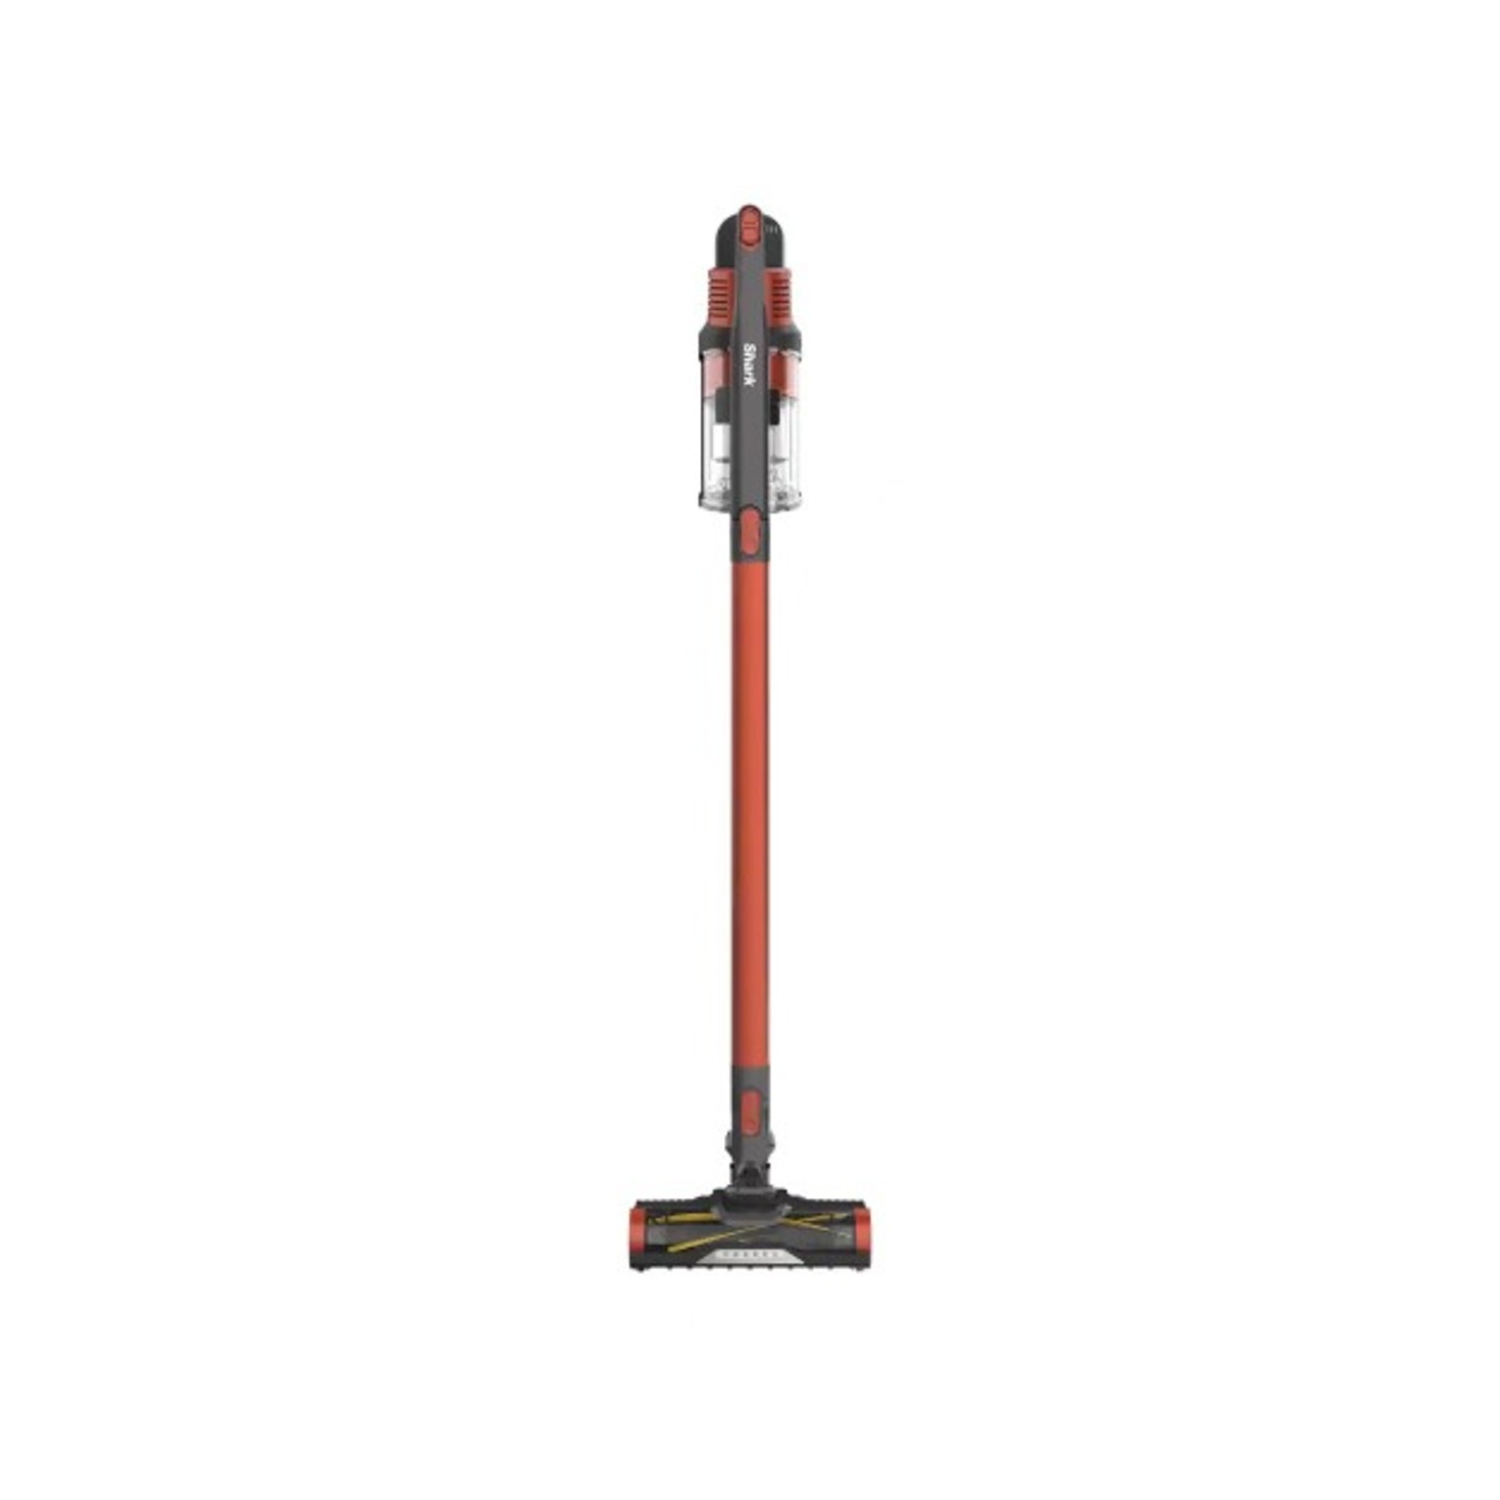 Shark Rocket Pet Pro Cordless Stick Vacuum (IZ142) - Refurbished Good